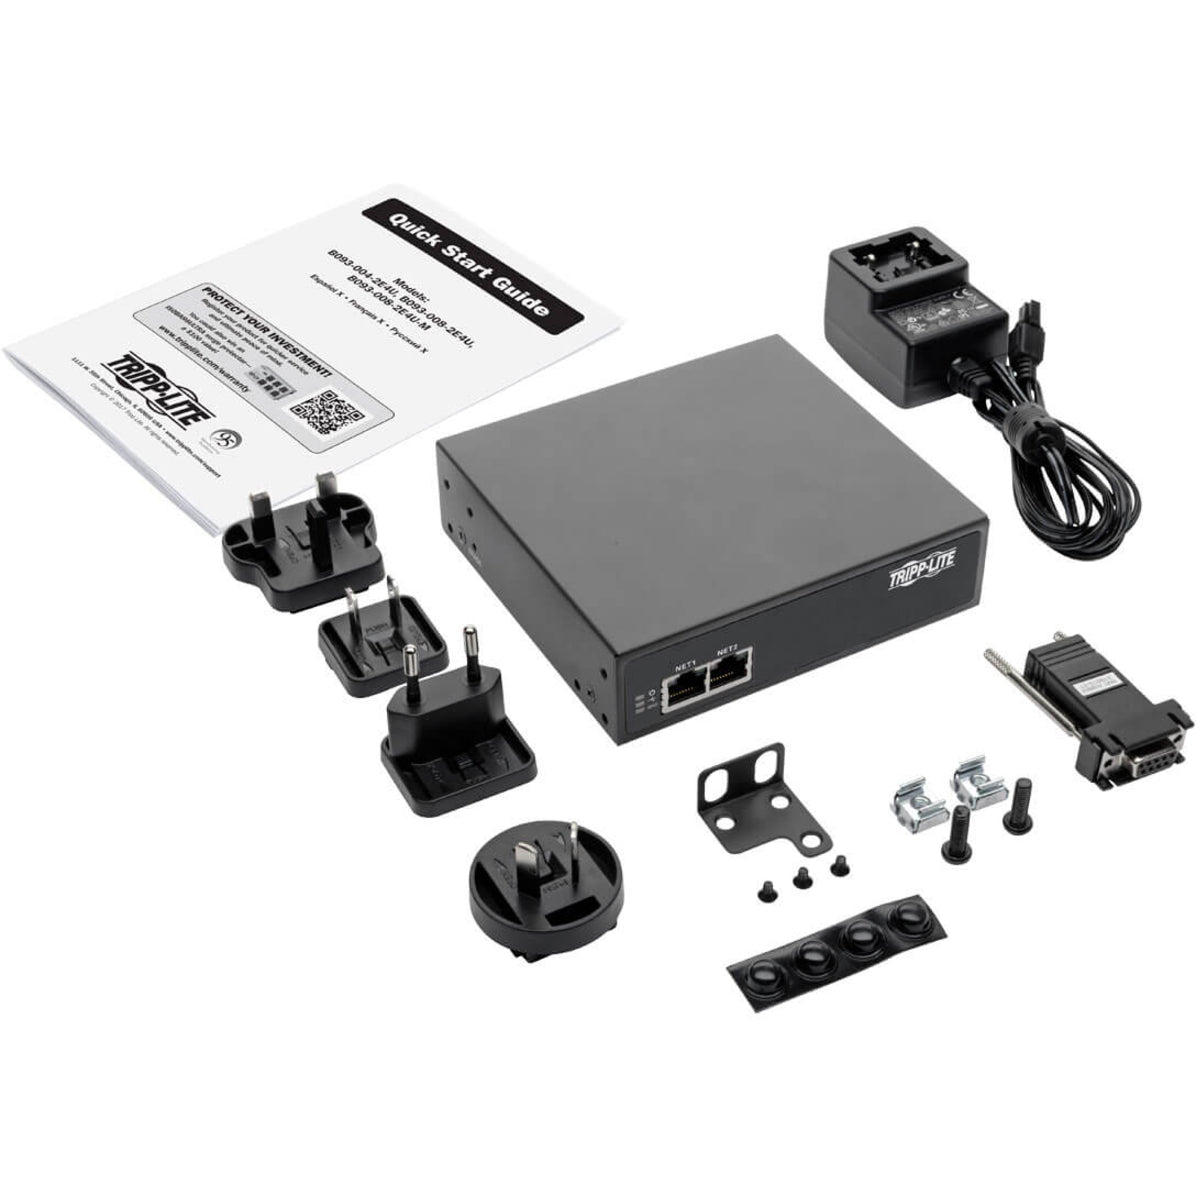 Tripp Lite B093-004-2E4U 4-Port Console Server with Dual GB NIC, 4G, Flash and 4 USB Ports, TAA Compliant